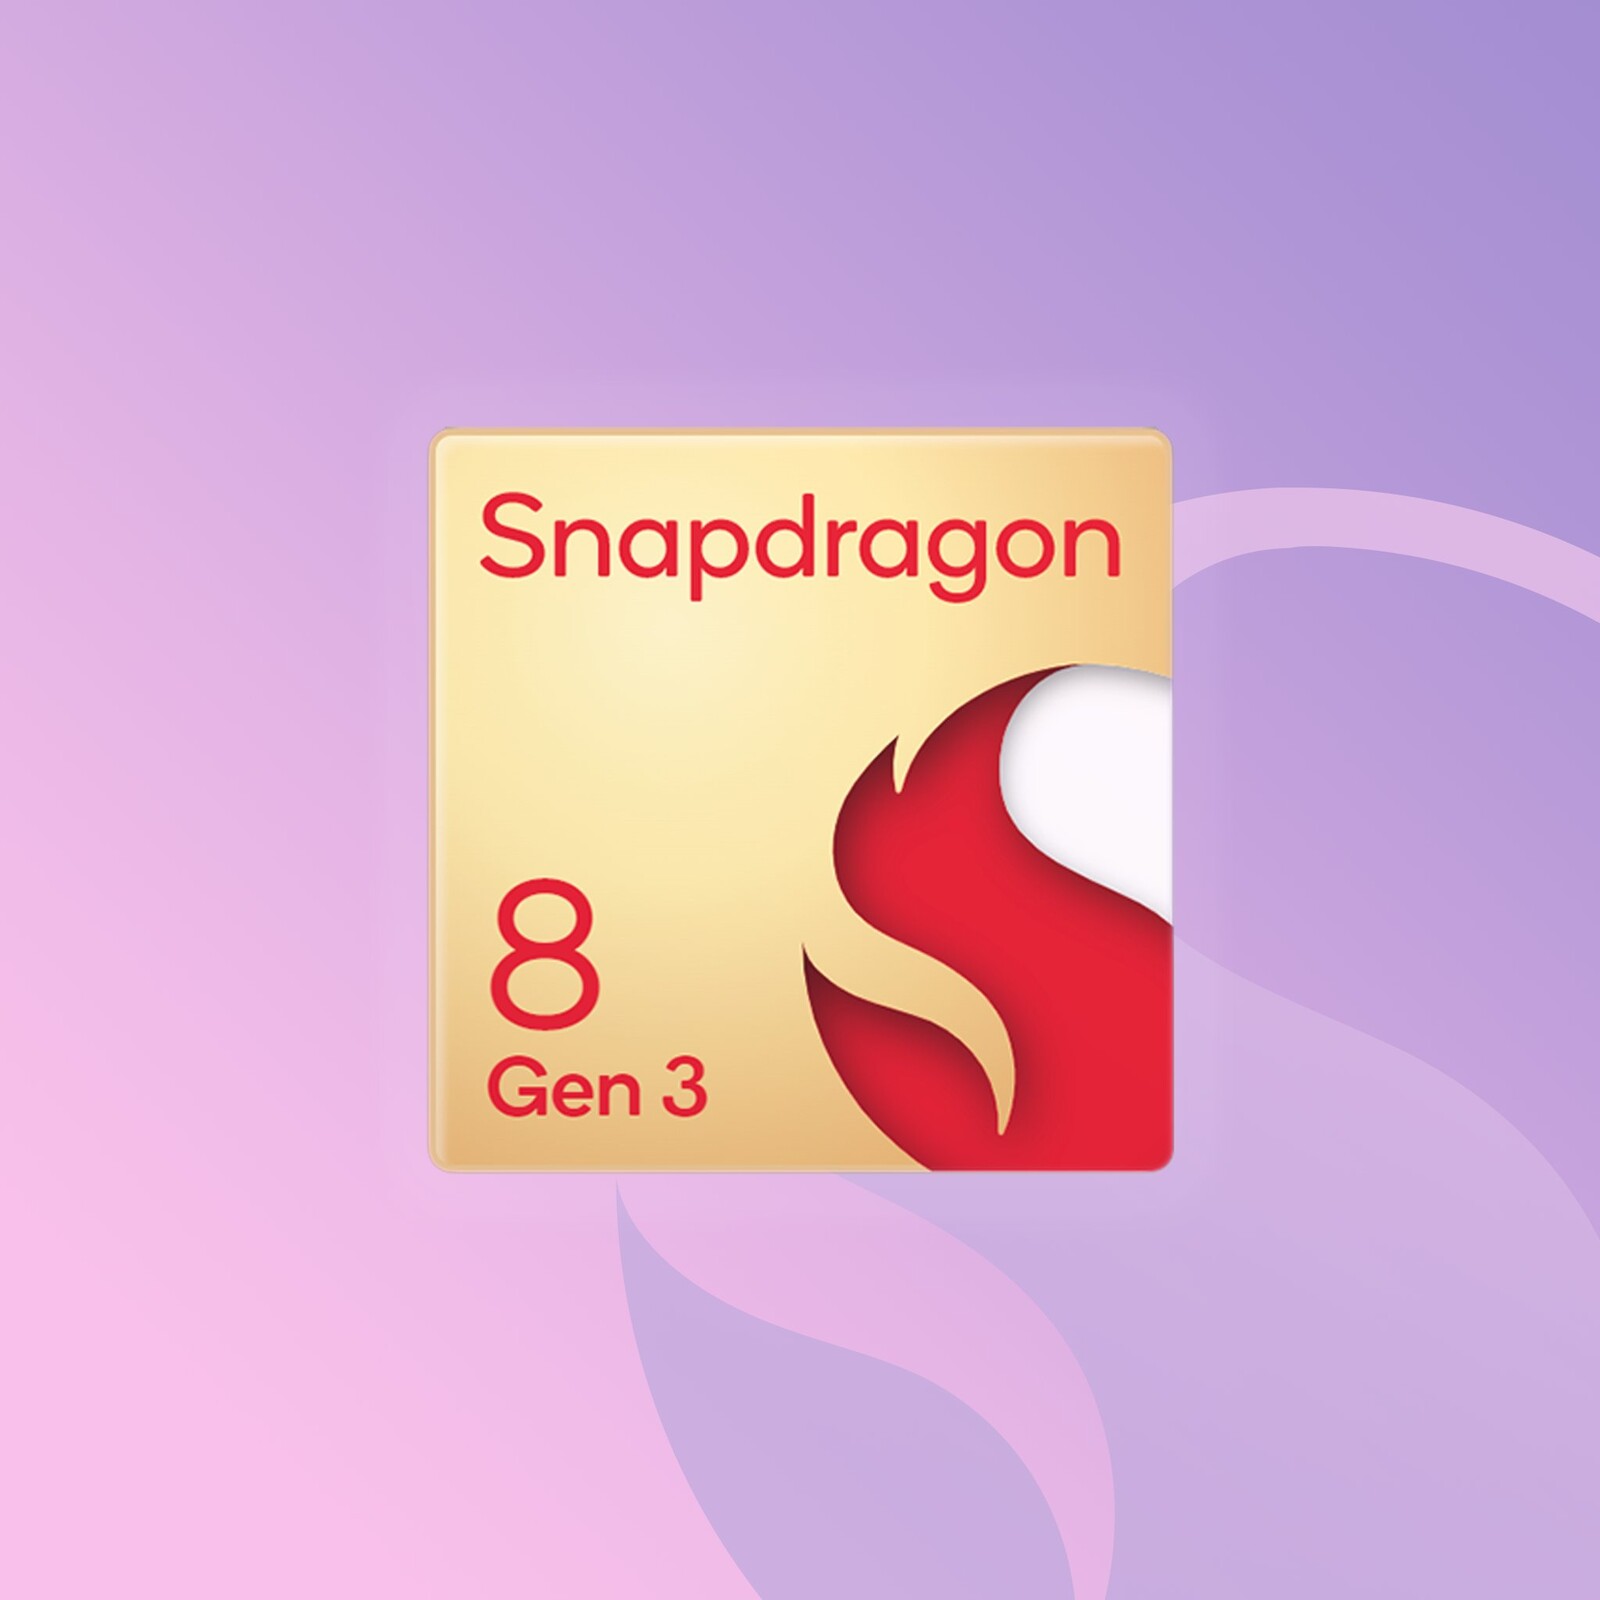 New Qualcomm Snapdragon 8 Gen 3 Geekbench and AnTuTu scores emerge online - NotebookCheck.net News